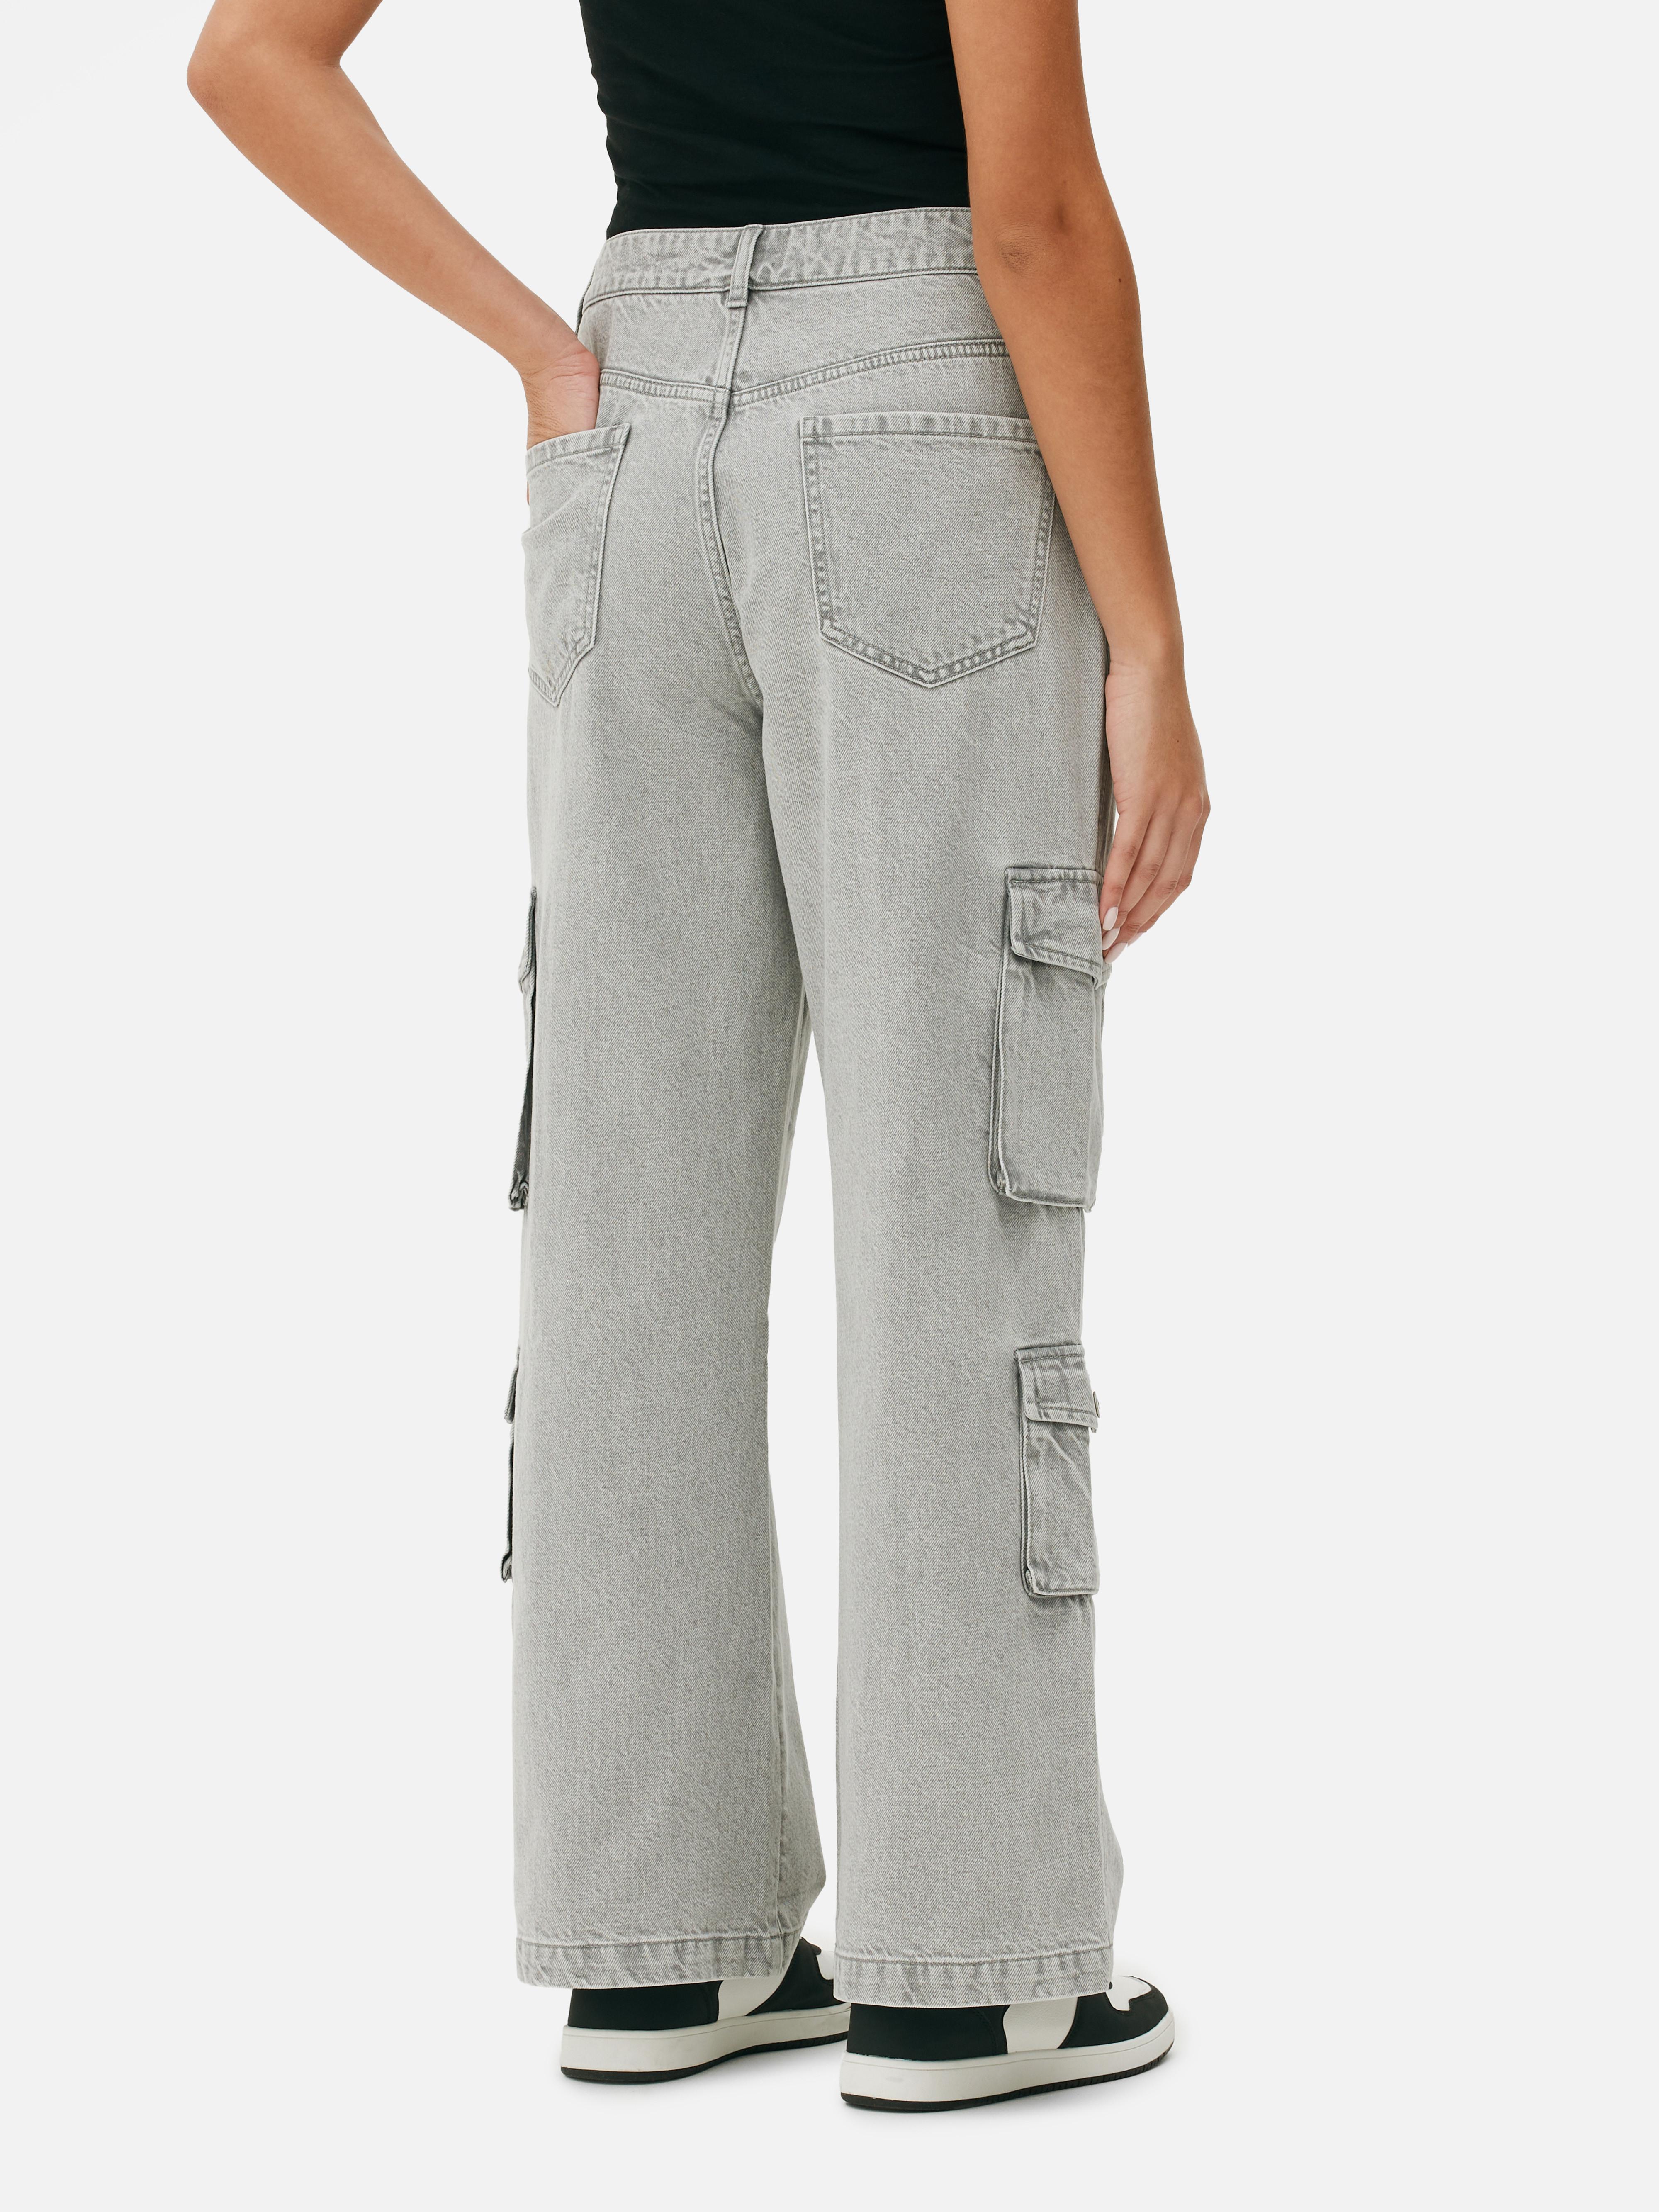 Women's Grey Loose-Fit Cargo Jeans | Primark